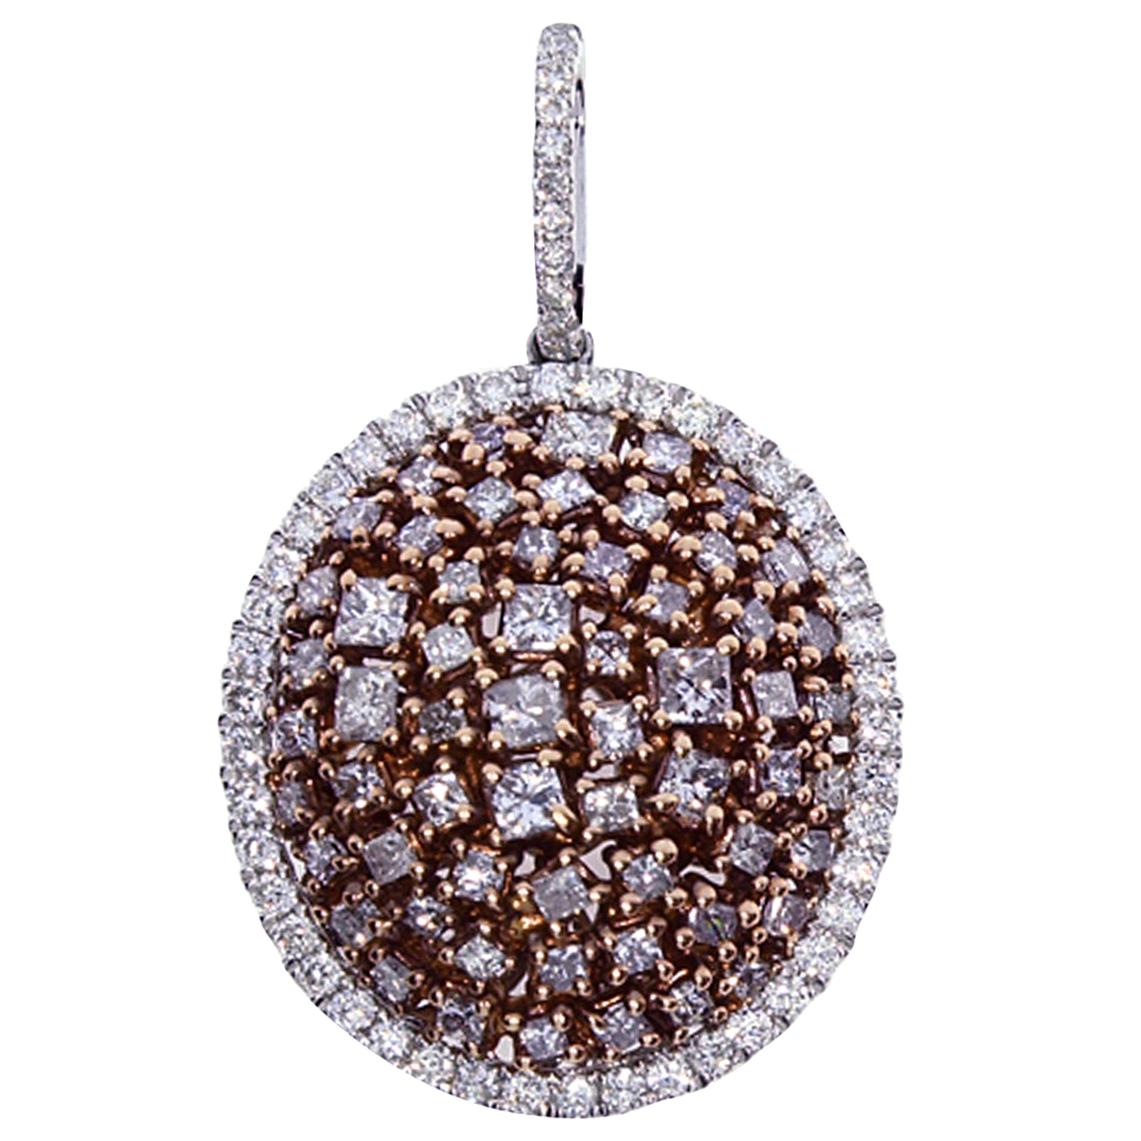 1.89 Carat Natural Fancy Pink Diamond Oval Cluster Pendant For Sale